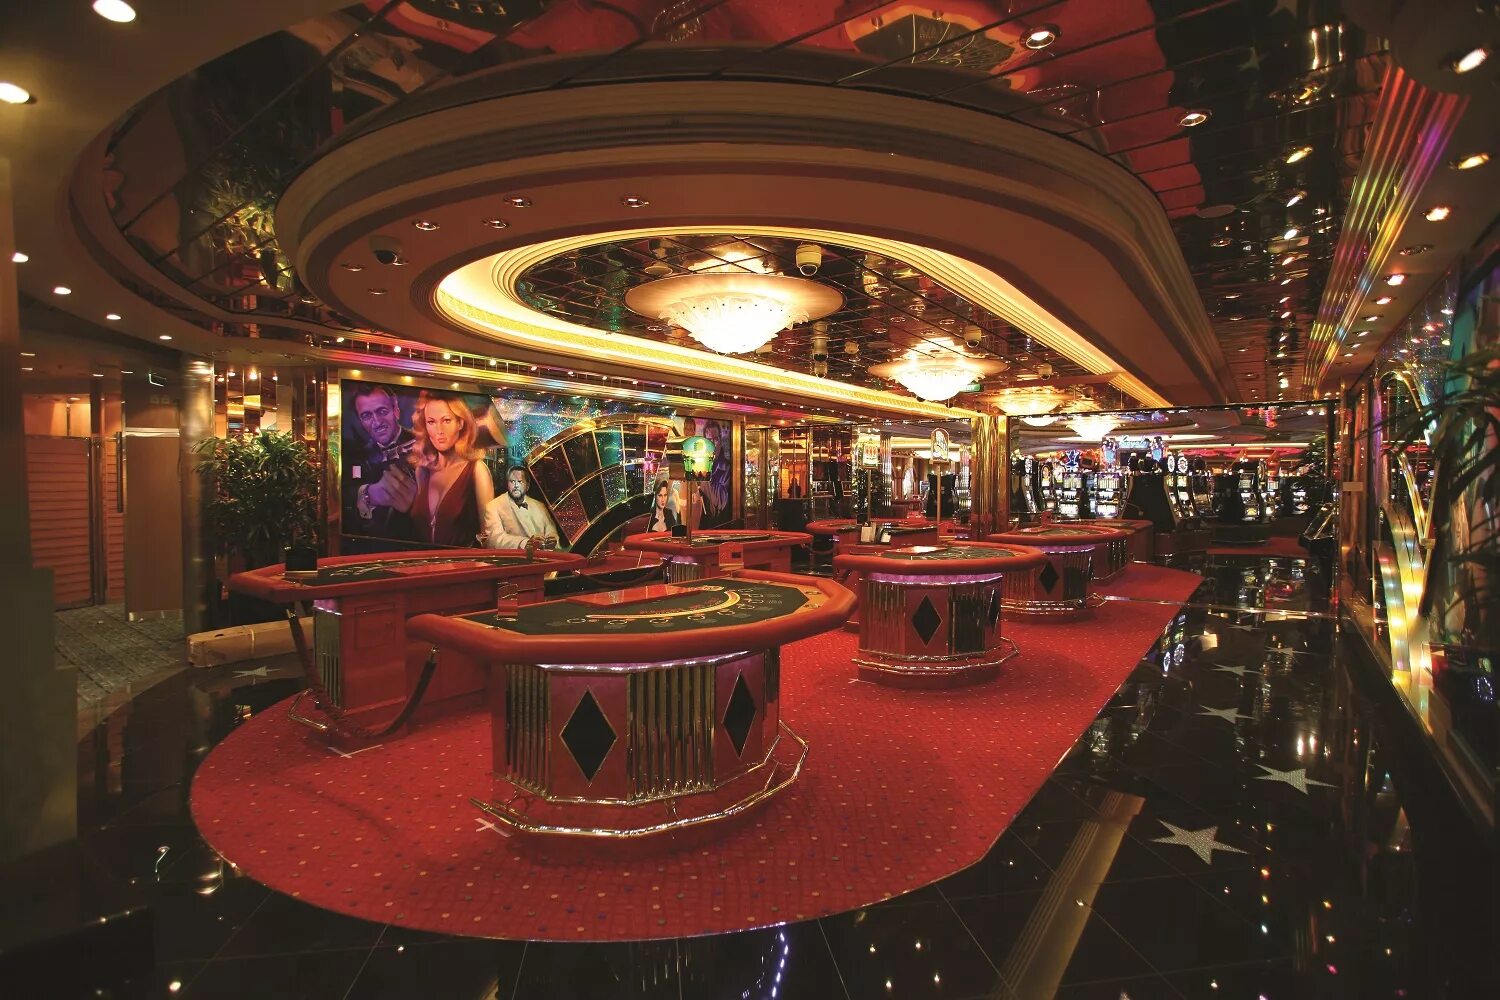 Voyager of the Seas казино. Casino Royal Caribbean Сингапуре. Symphony of the Seas внутри казино. Казино изнутри.